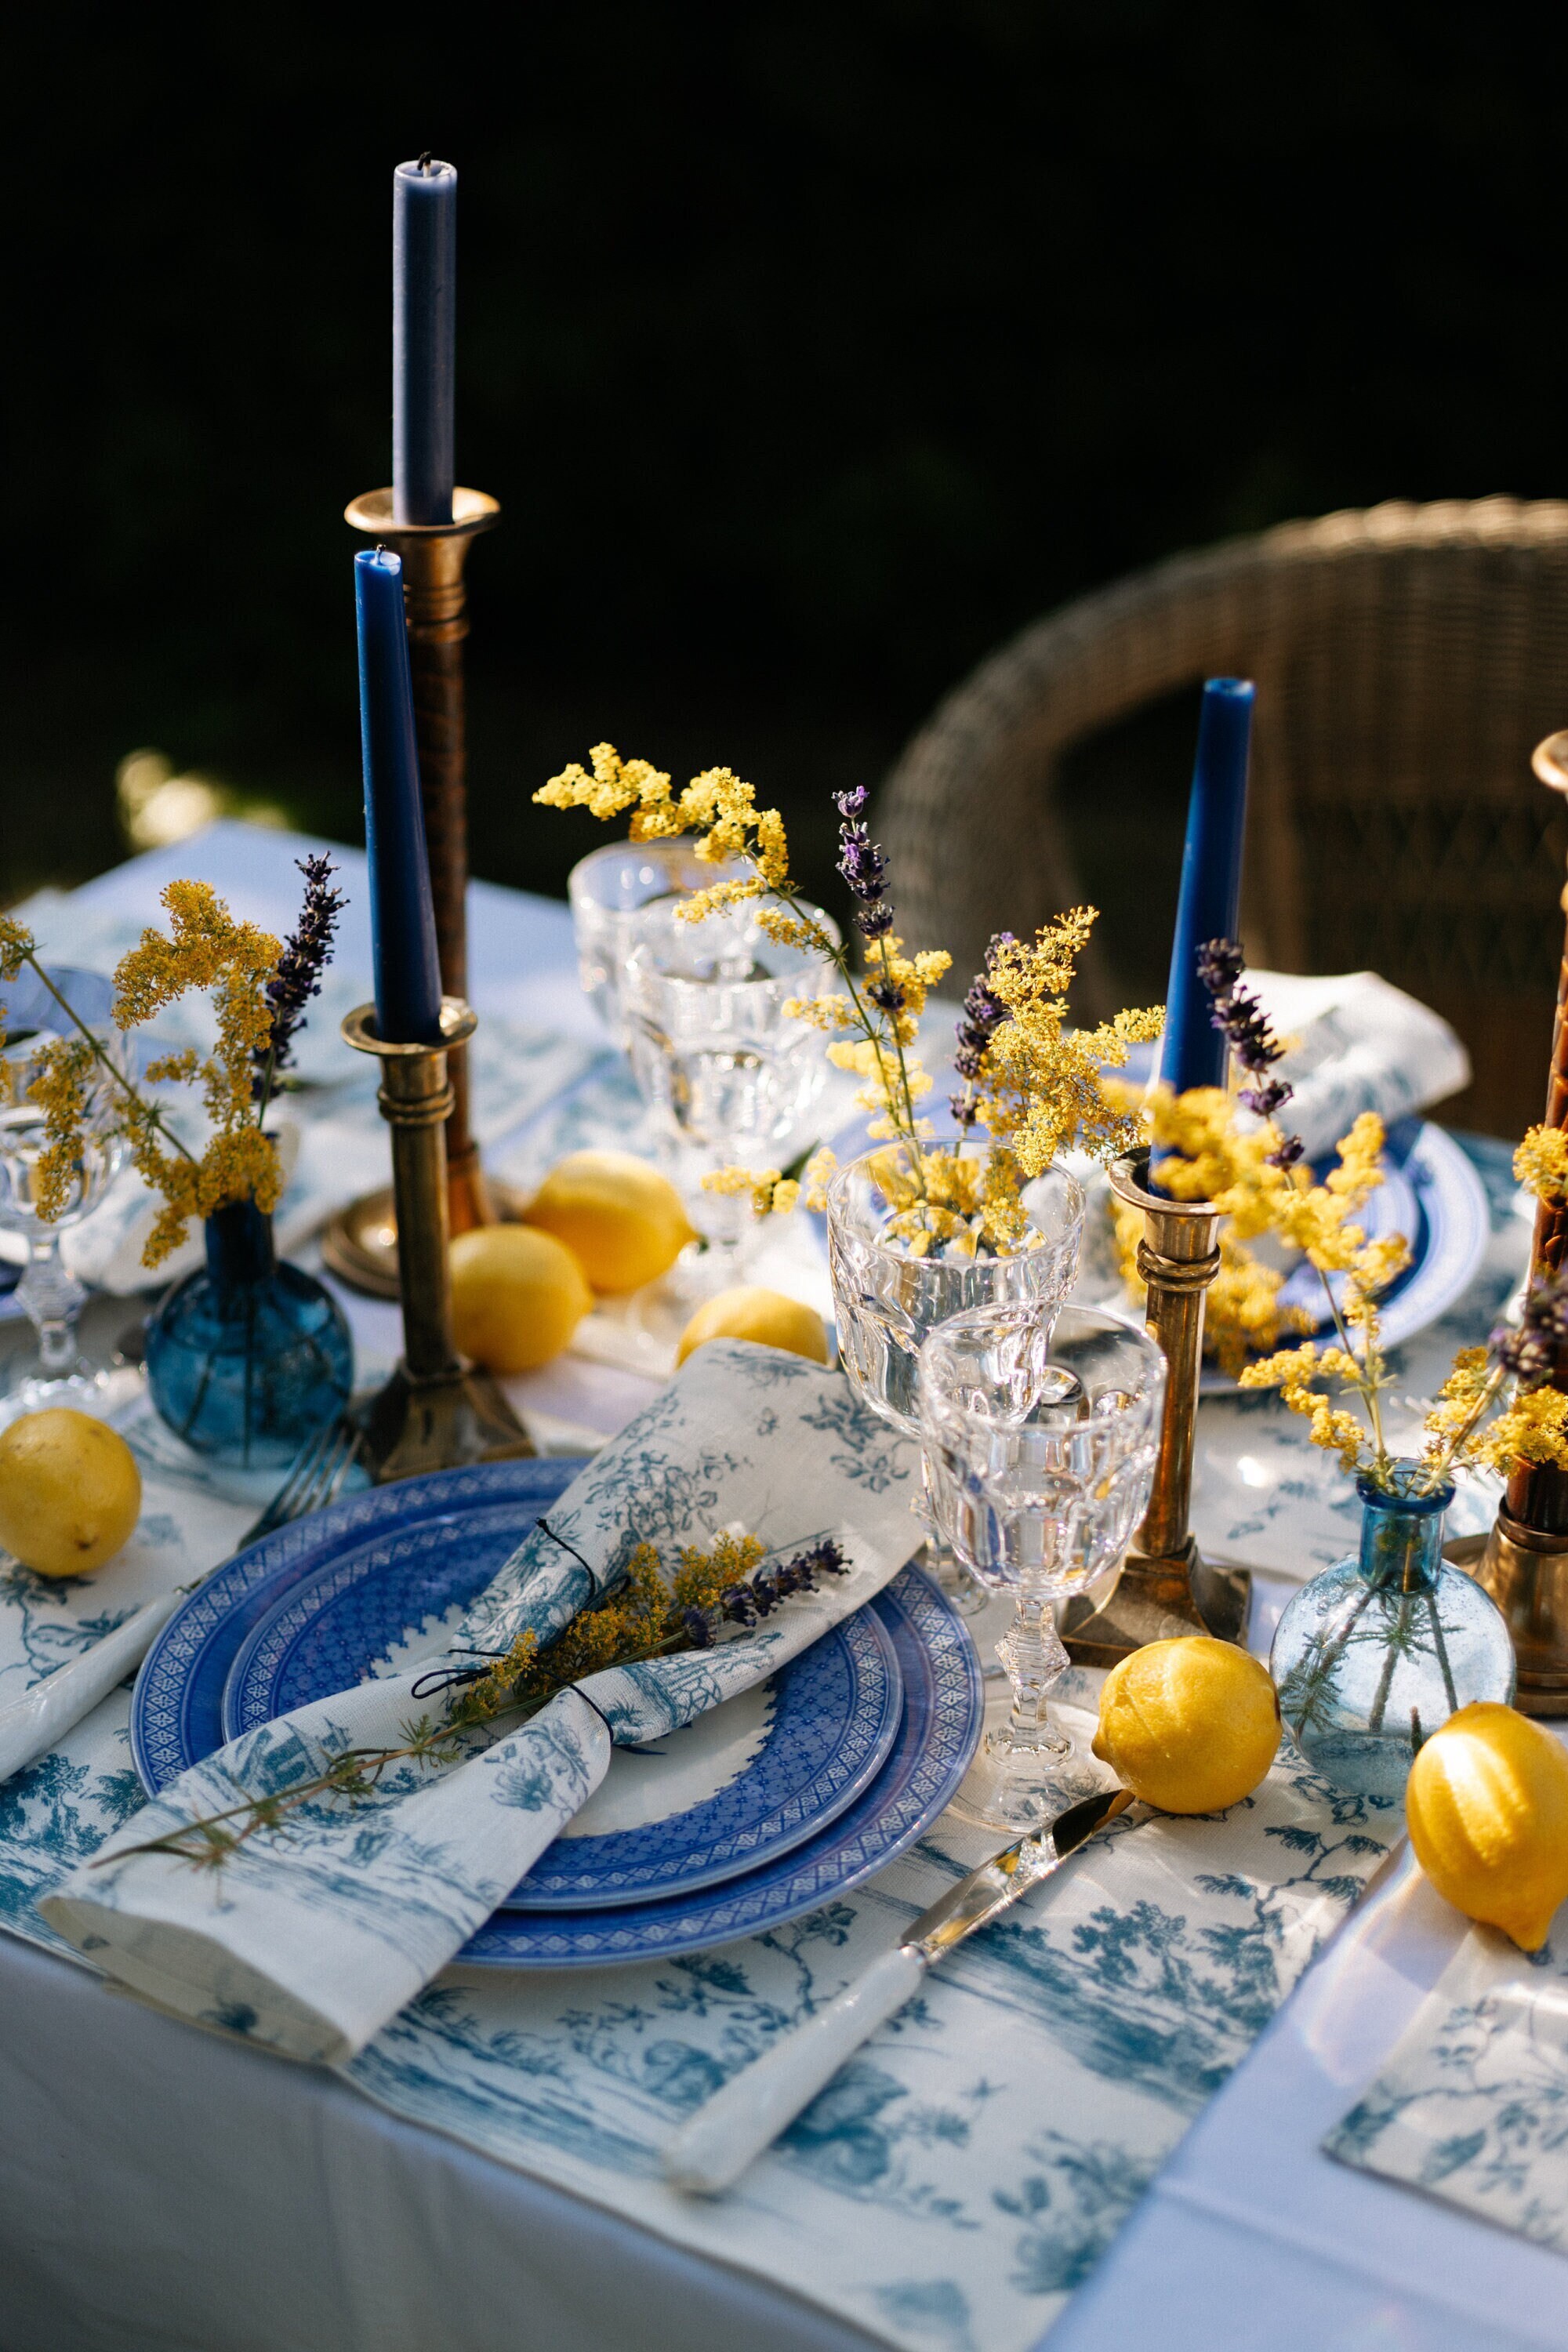 Linen napkins blue set of 2, 4, 6, 8, Organic yellow kitchen napkins cloth  40 cm - Shop Daloni Place Mats & Dining Décor - Pinkoi